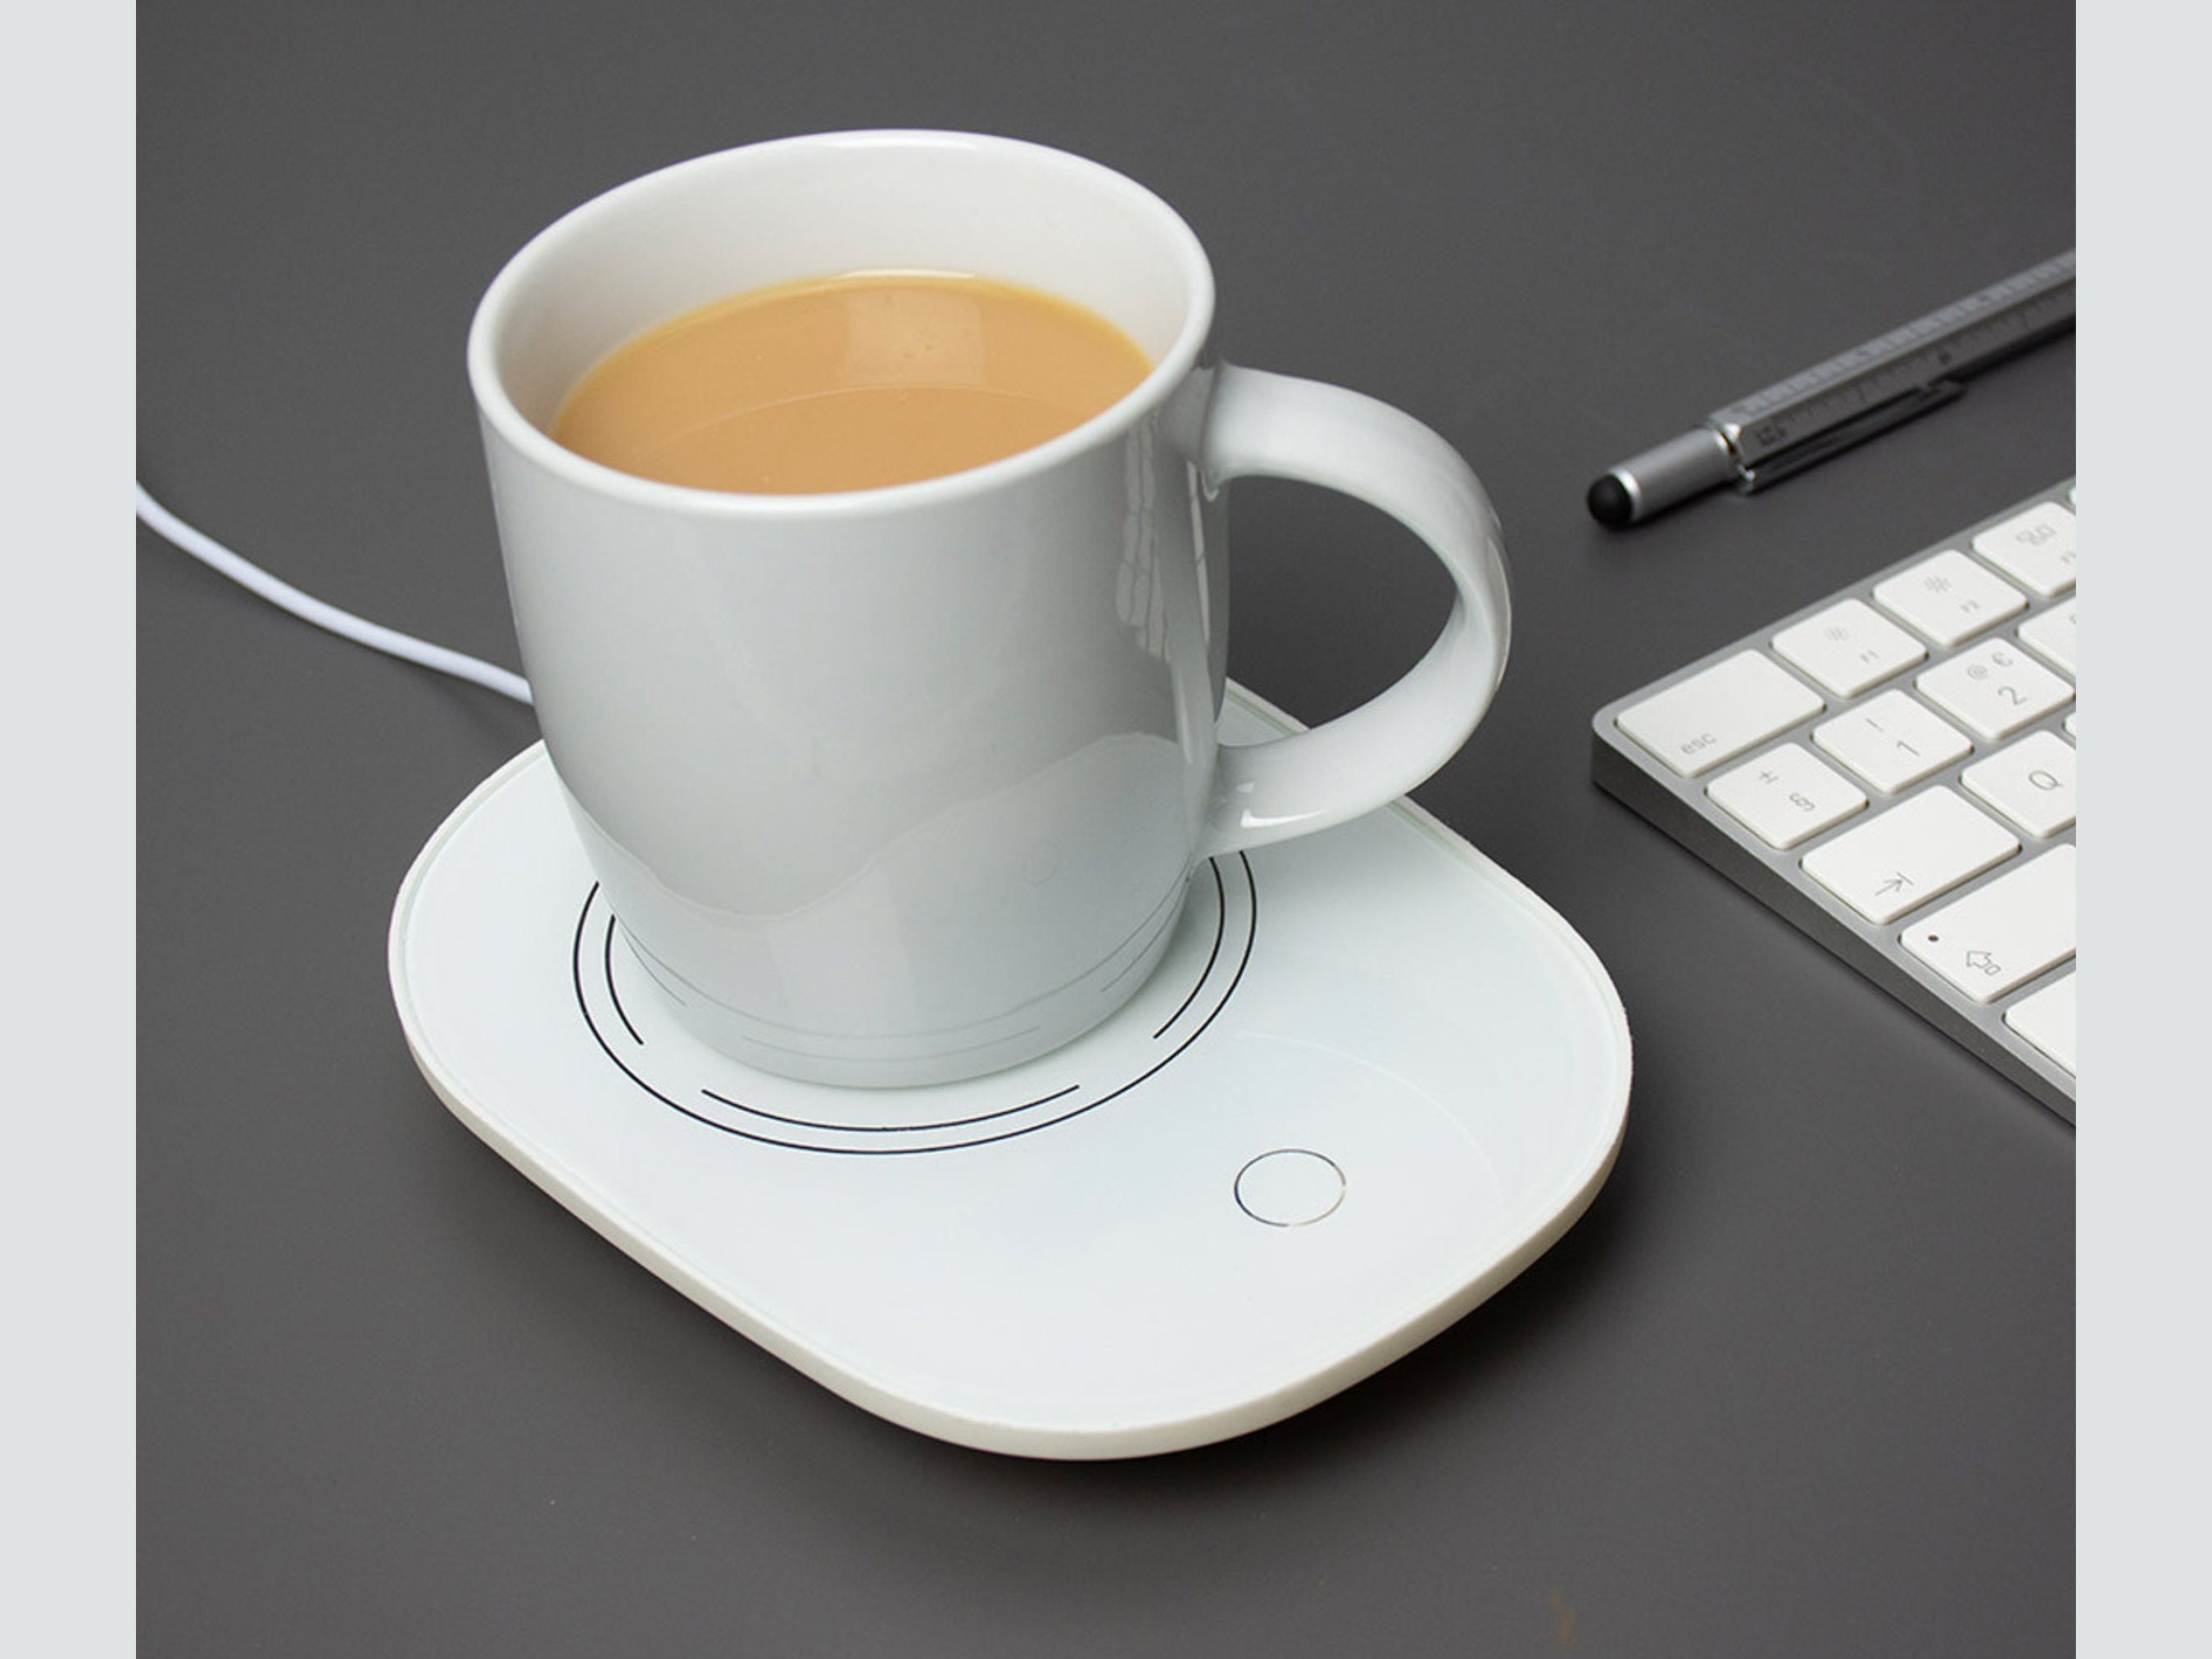 USB Wärmer Gadget, Dünnes Cup Pad, Kaffee, Tee, Getränk, USB